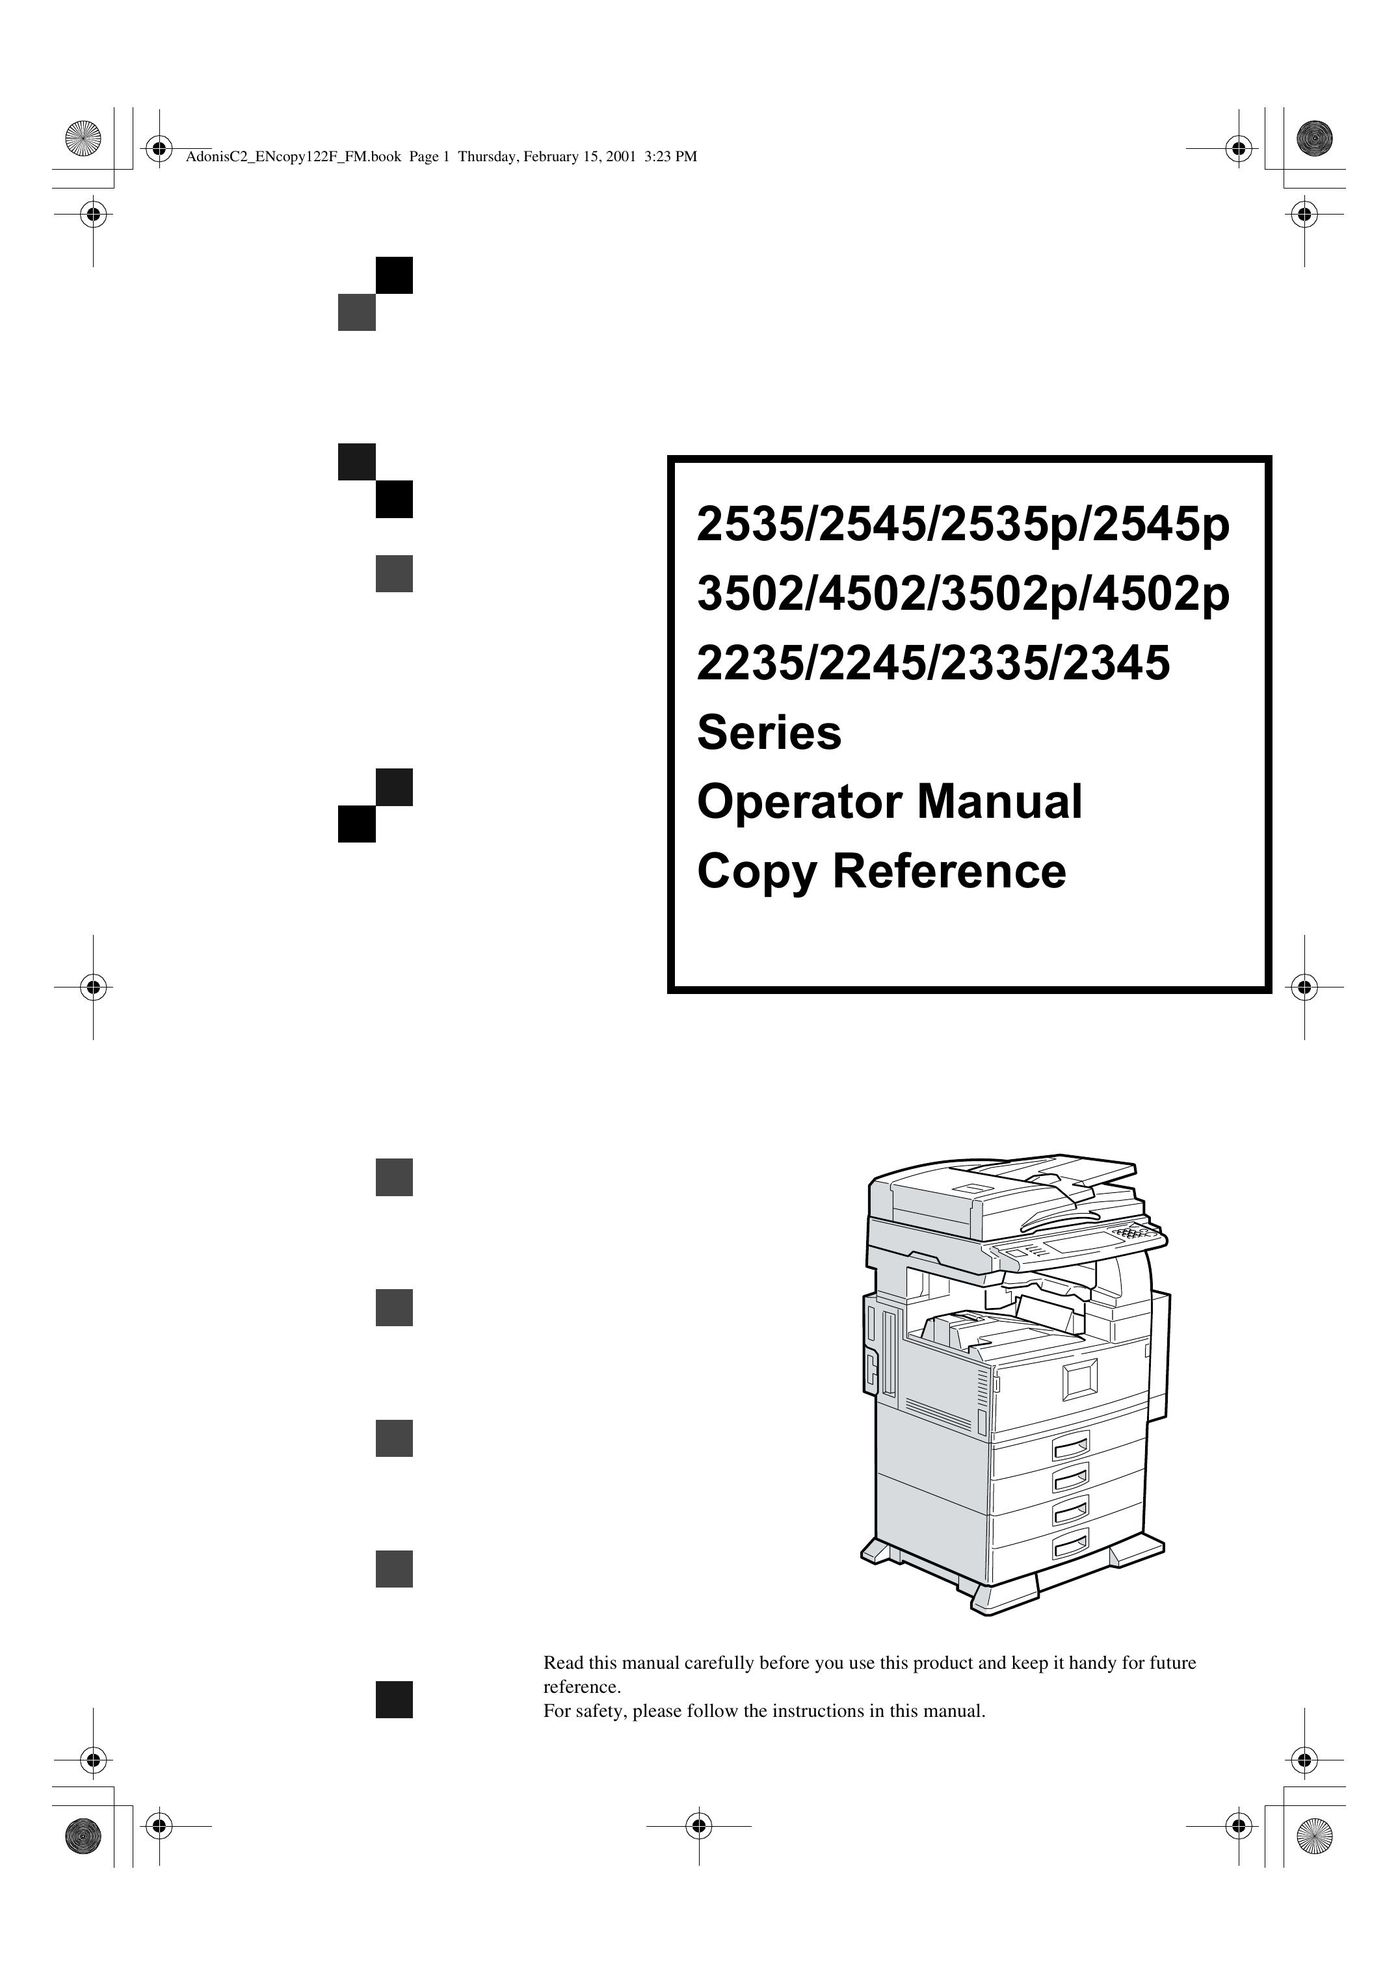 Savin 2245 All in One Printer User Manual